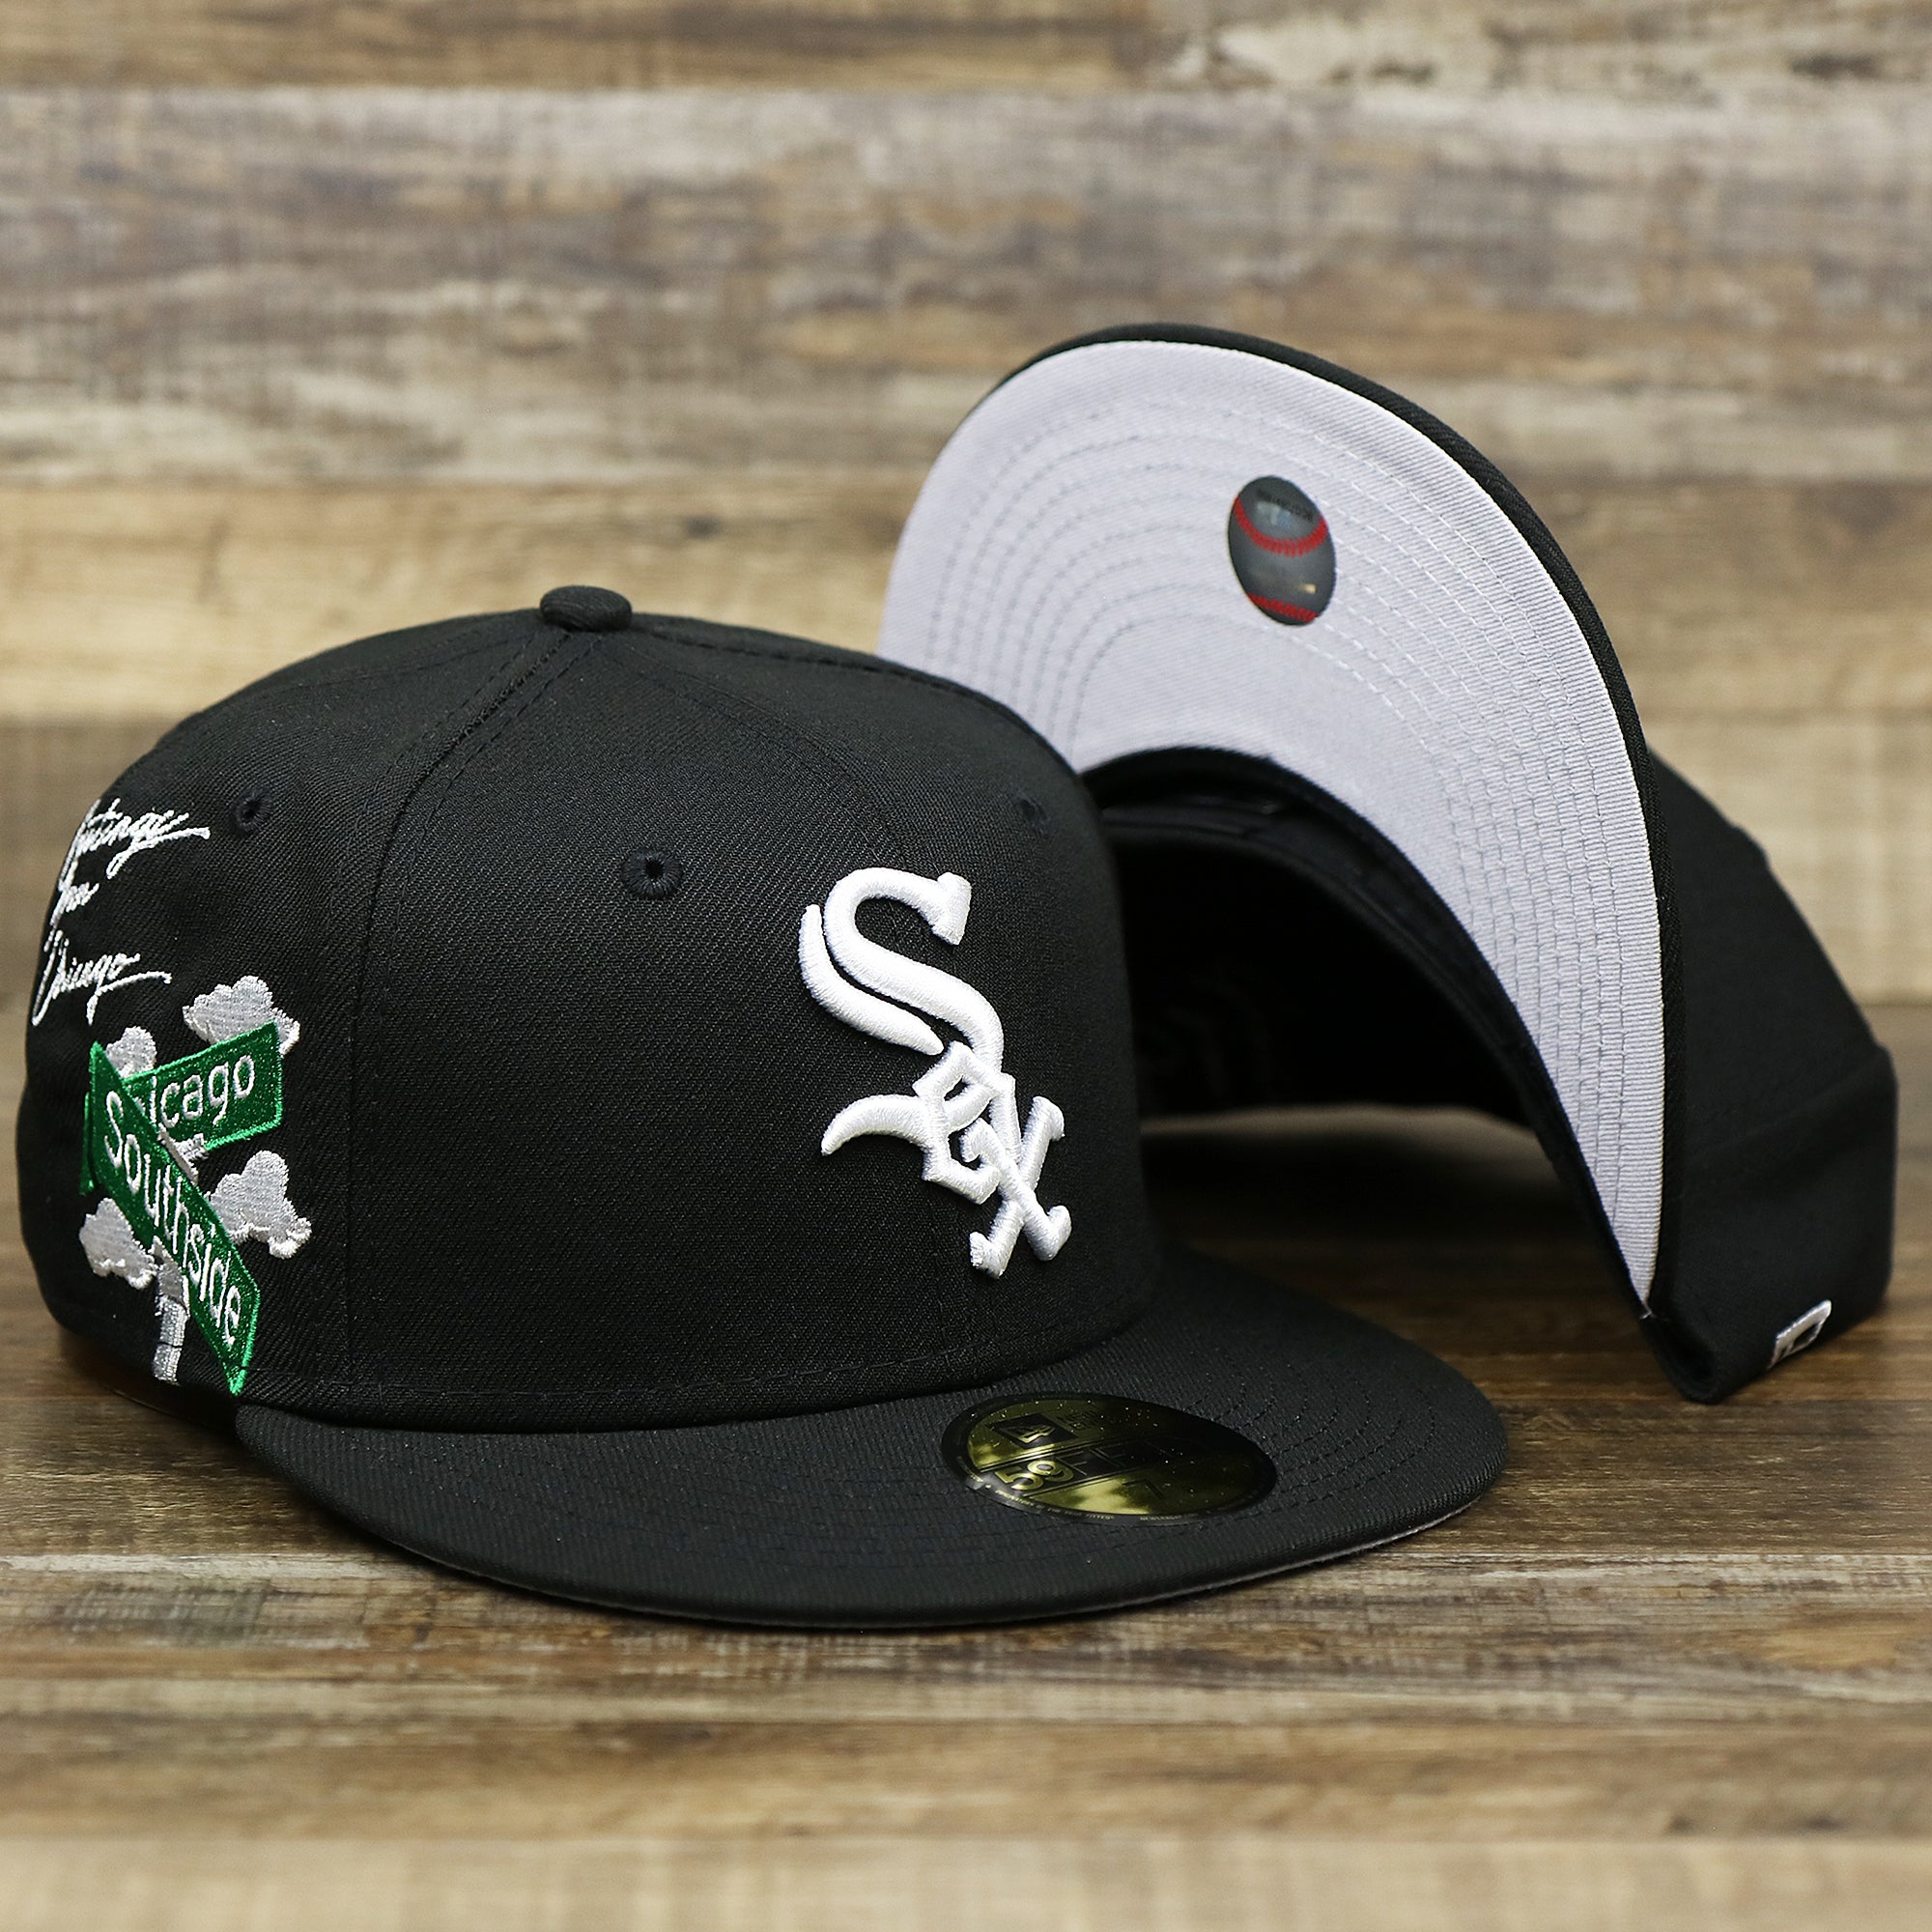 Southside White Sox. New Era 59FIFTY Graphite & Black Hat Silver